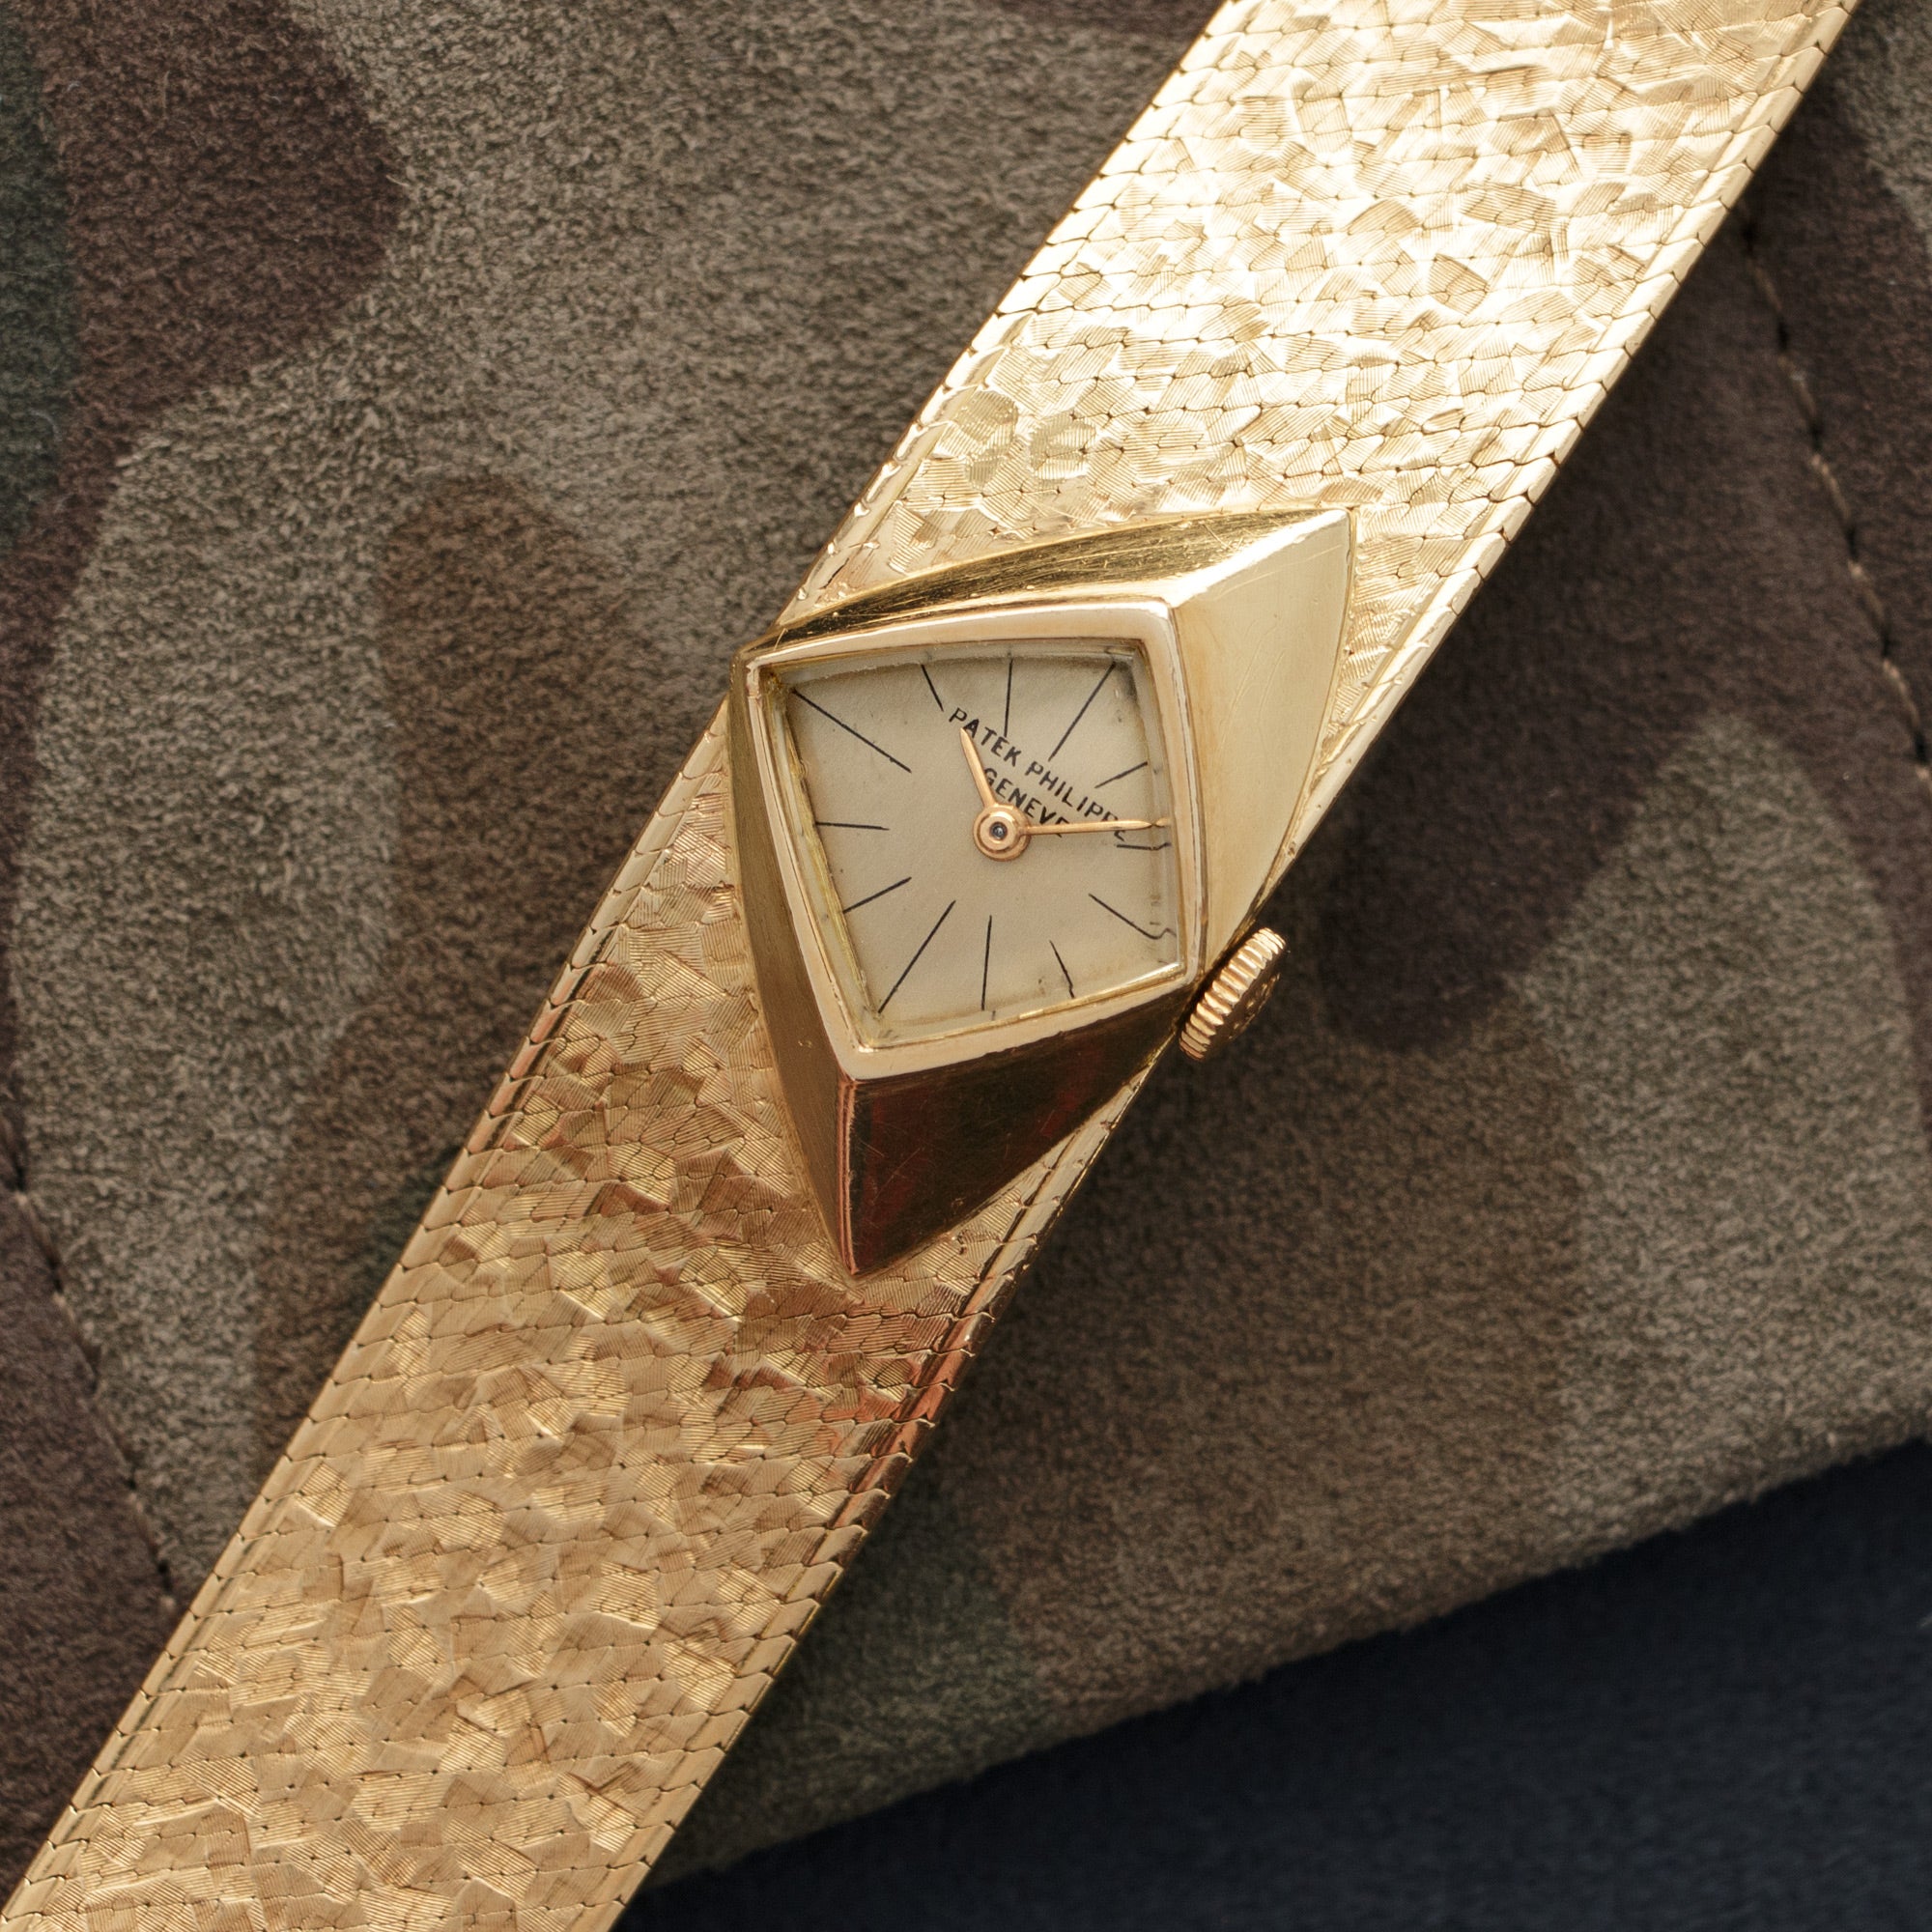 Patek Philippe - Patek Philippe Yellow Gold Asymmetrical Watch, Ref. 3270, Designed by Gilbert Albert - The Keystone Watches